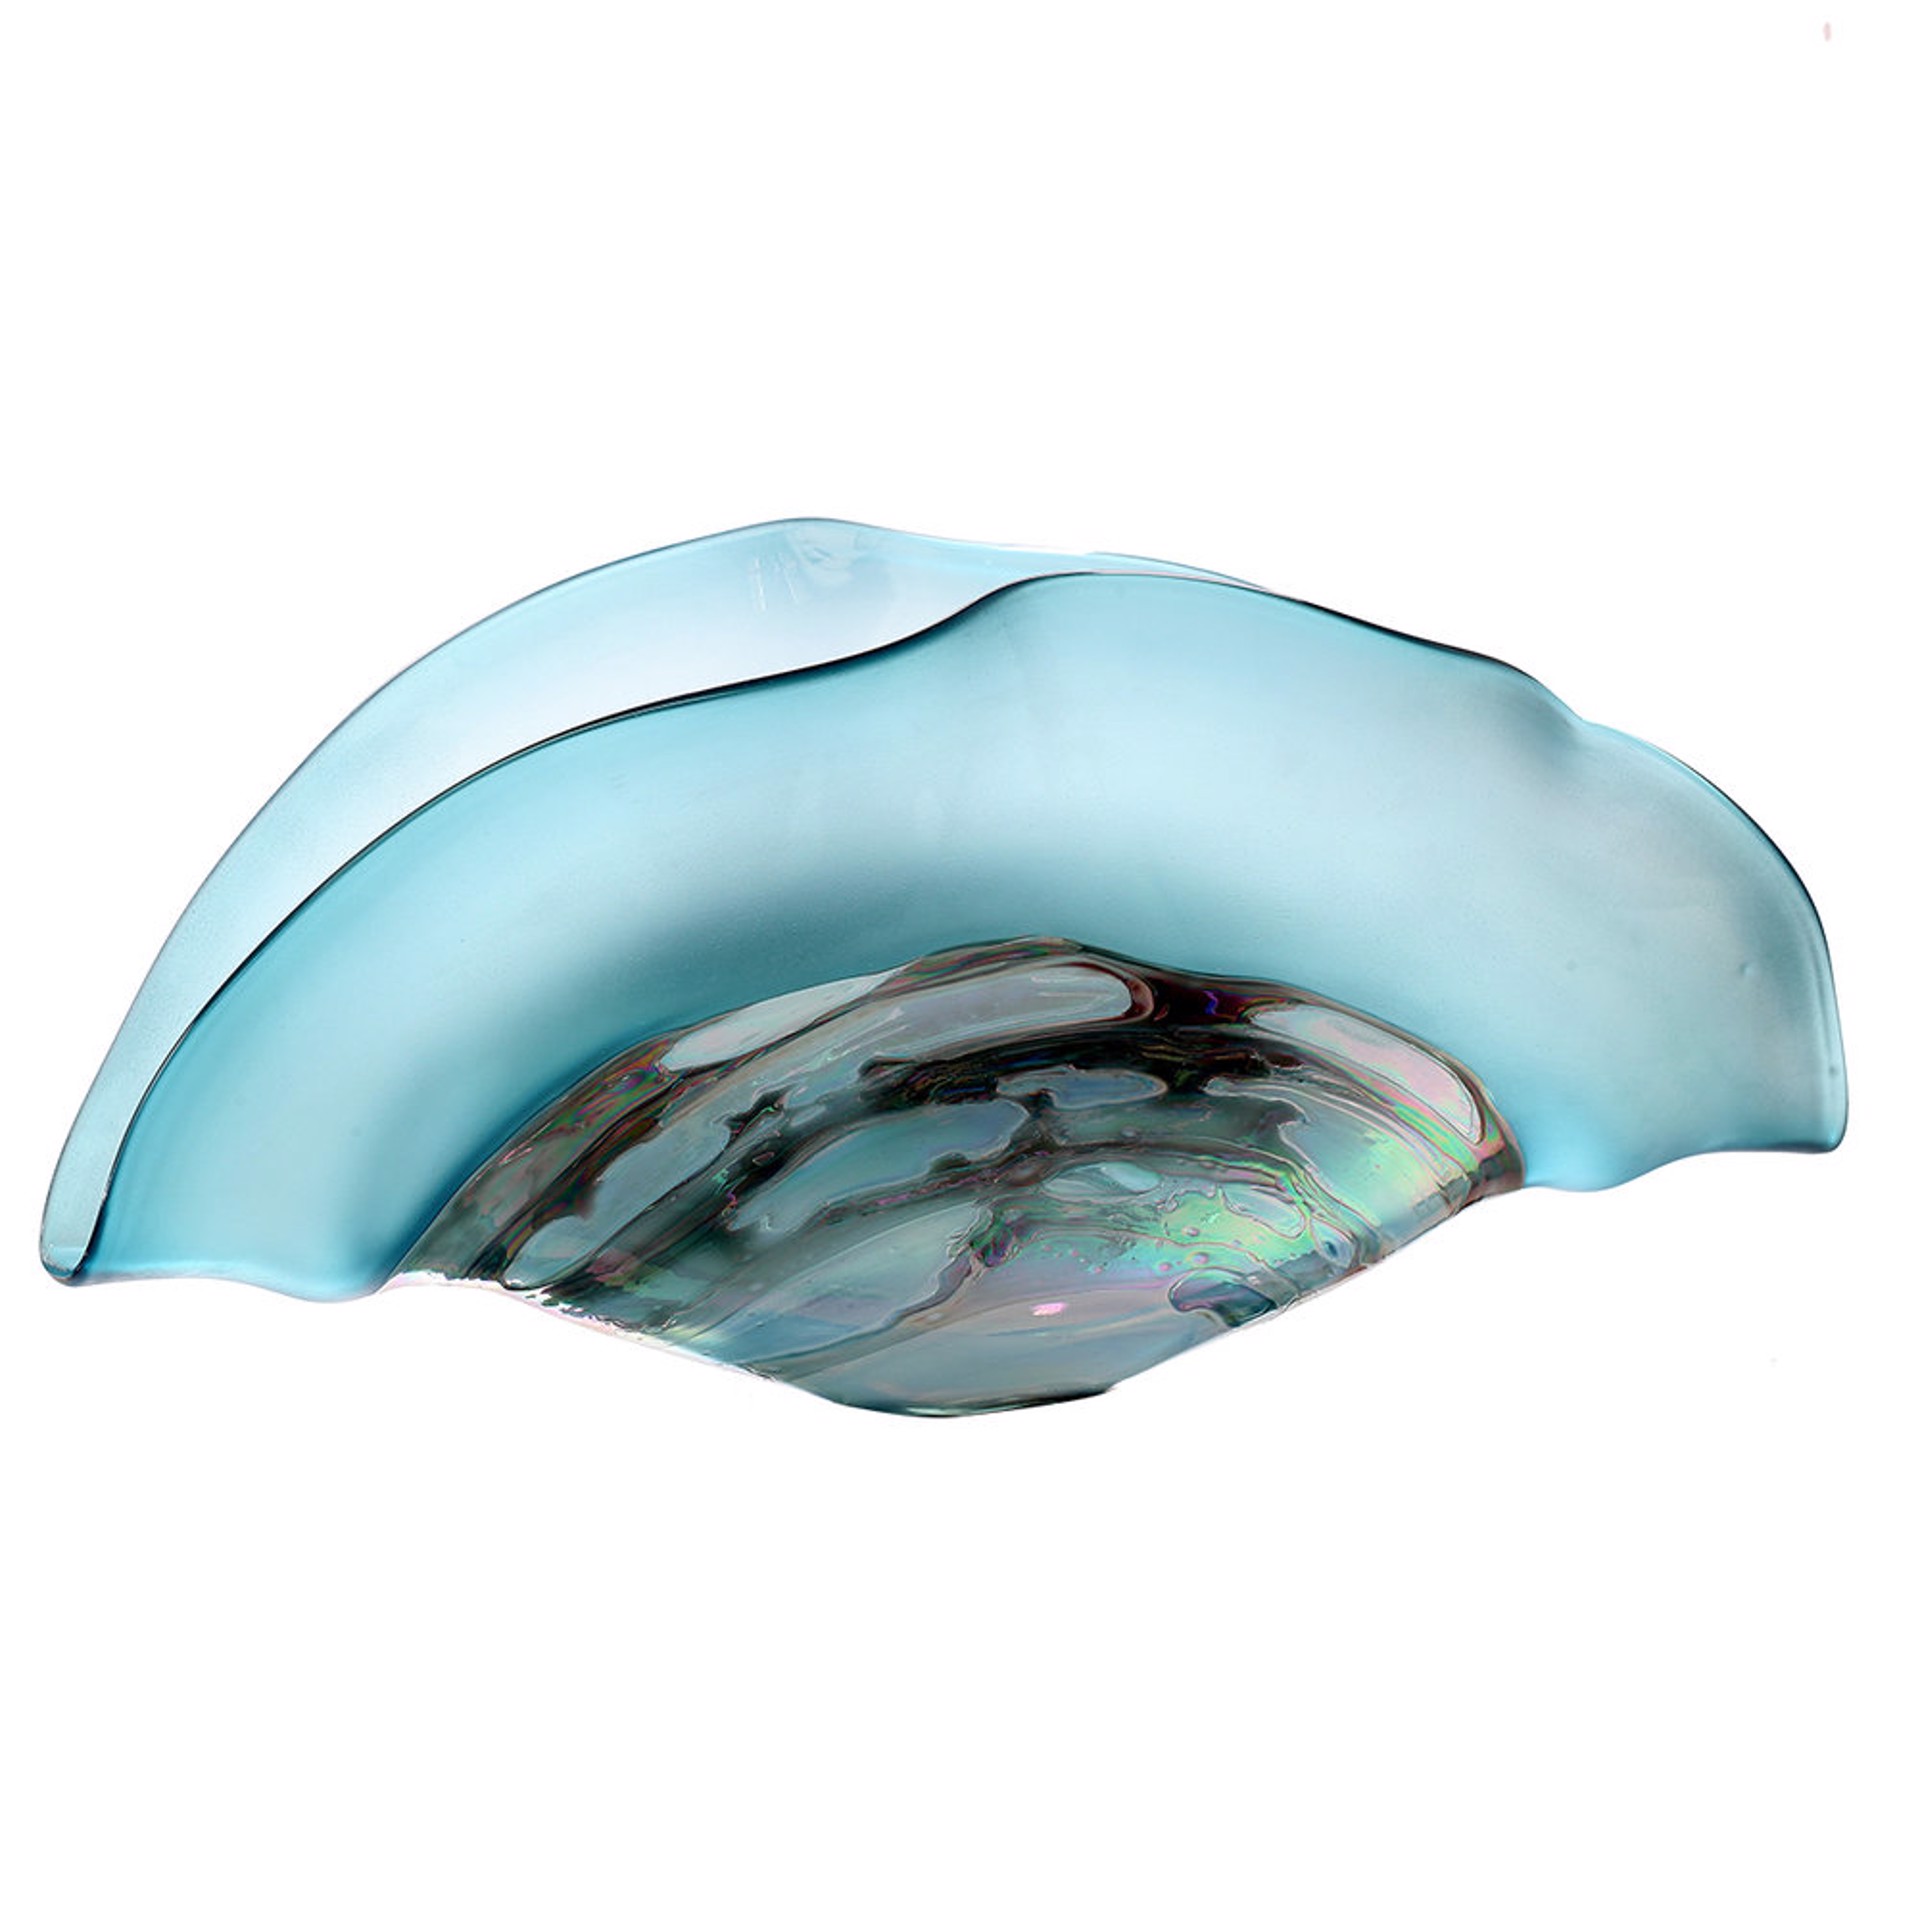 Blue Folded Shell by Art Glass